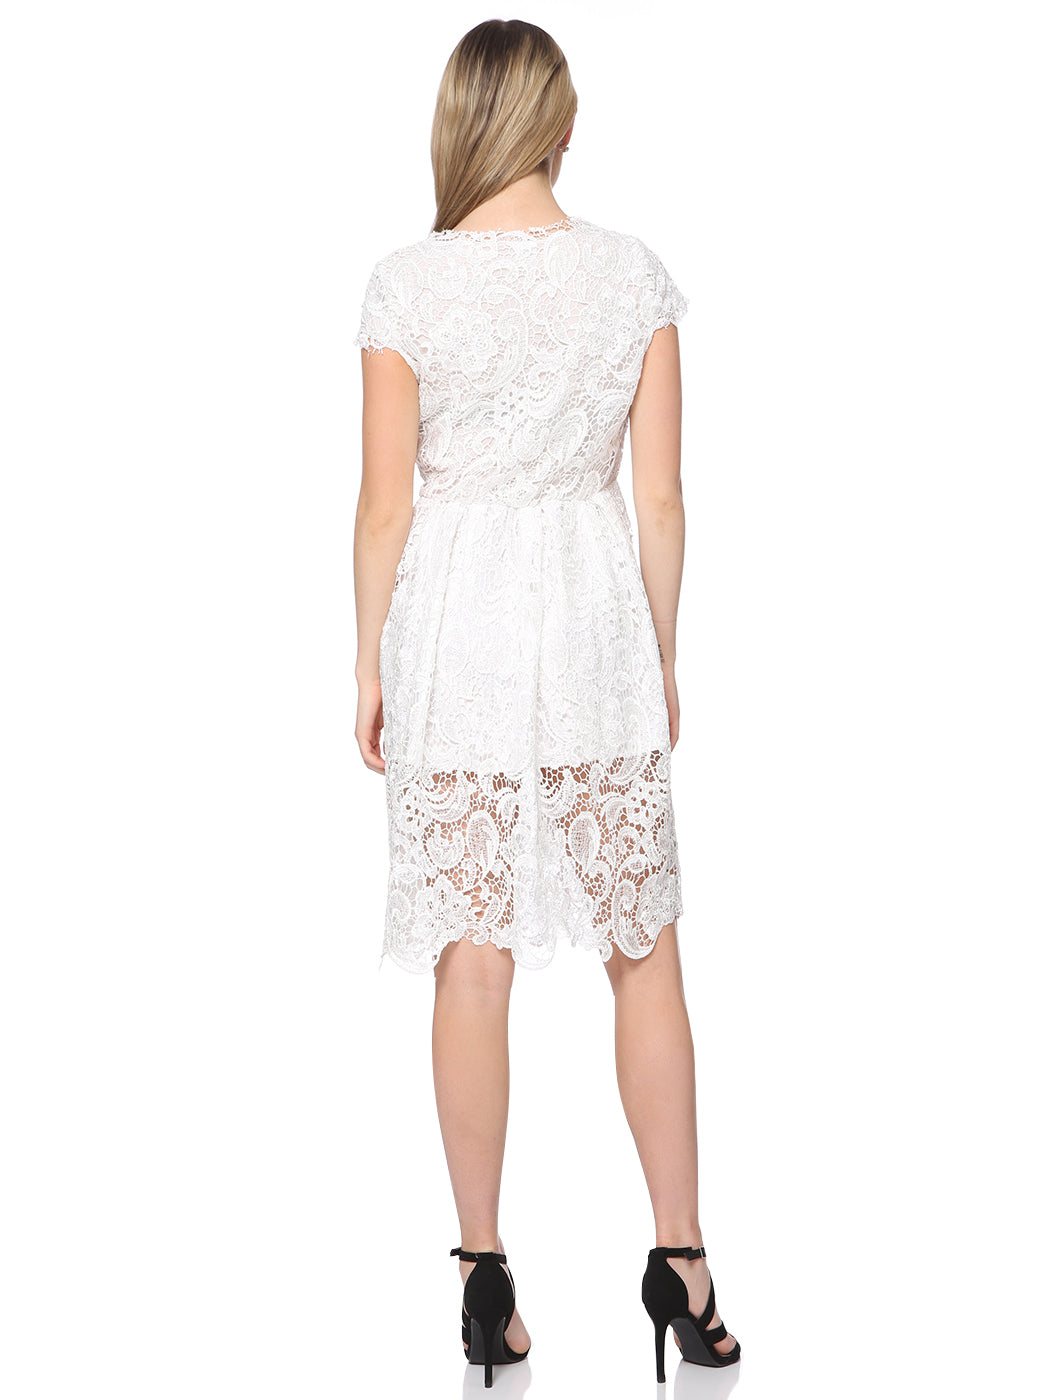 White Lace Crochet Cap Sleeve Sheath Dress